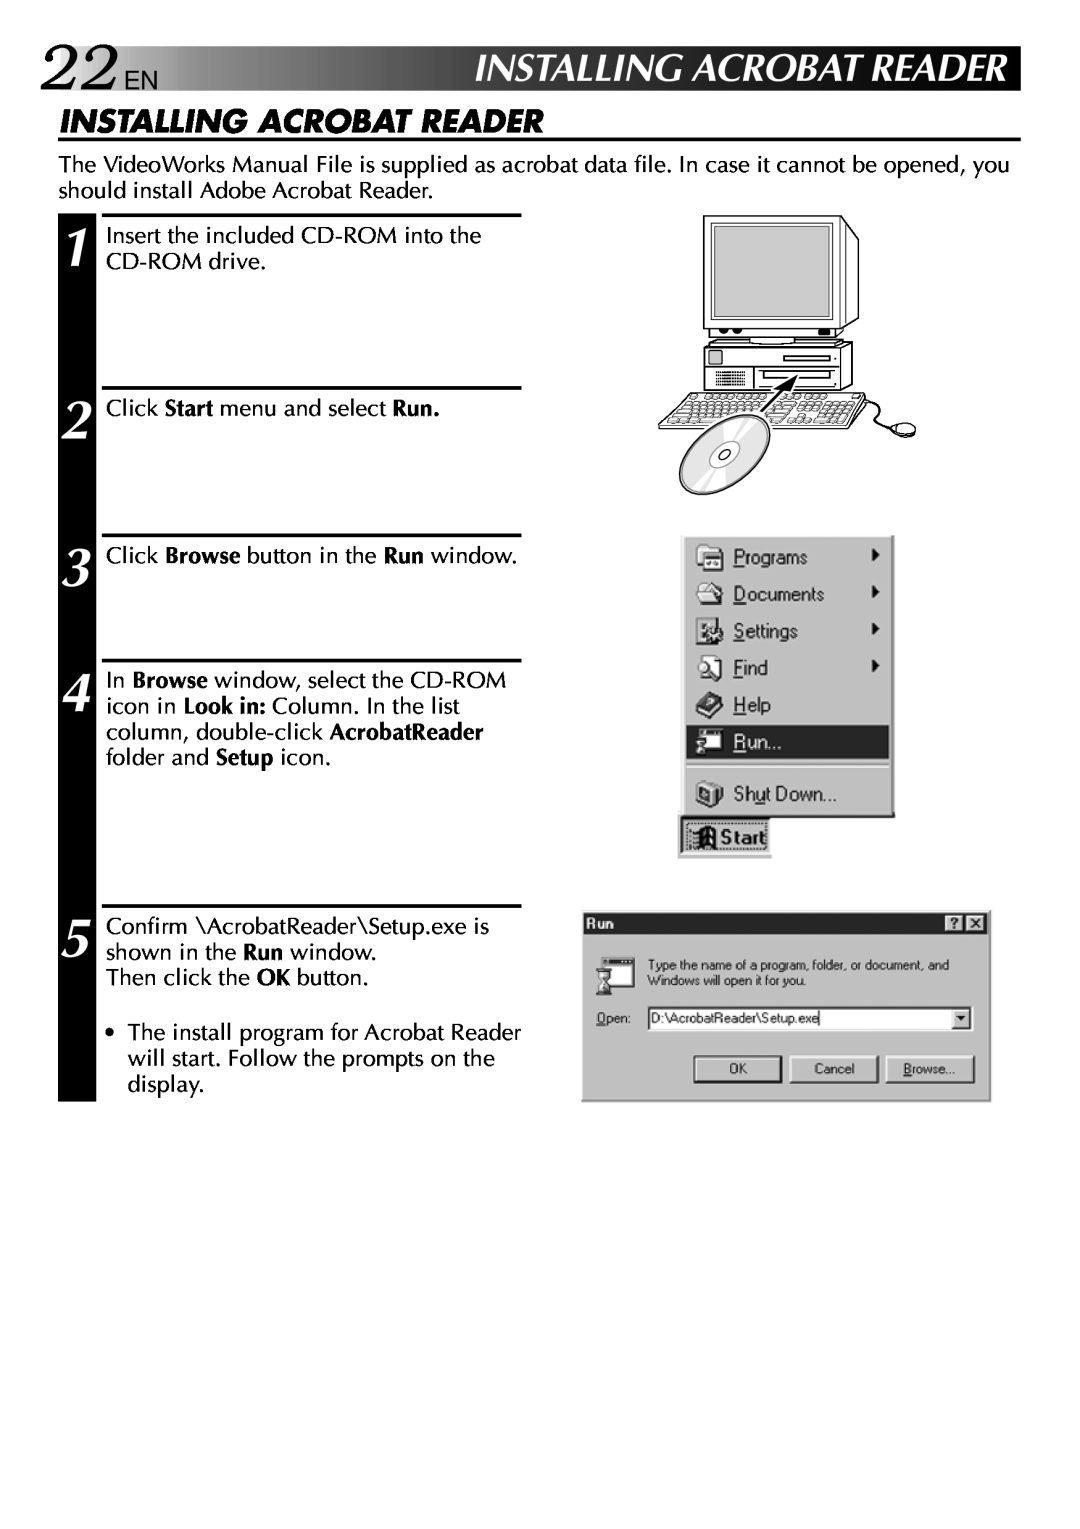 JVC GV-DV1000 manual 22EN, Installing Acrobat Reader 